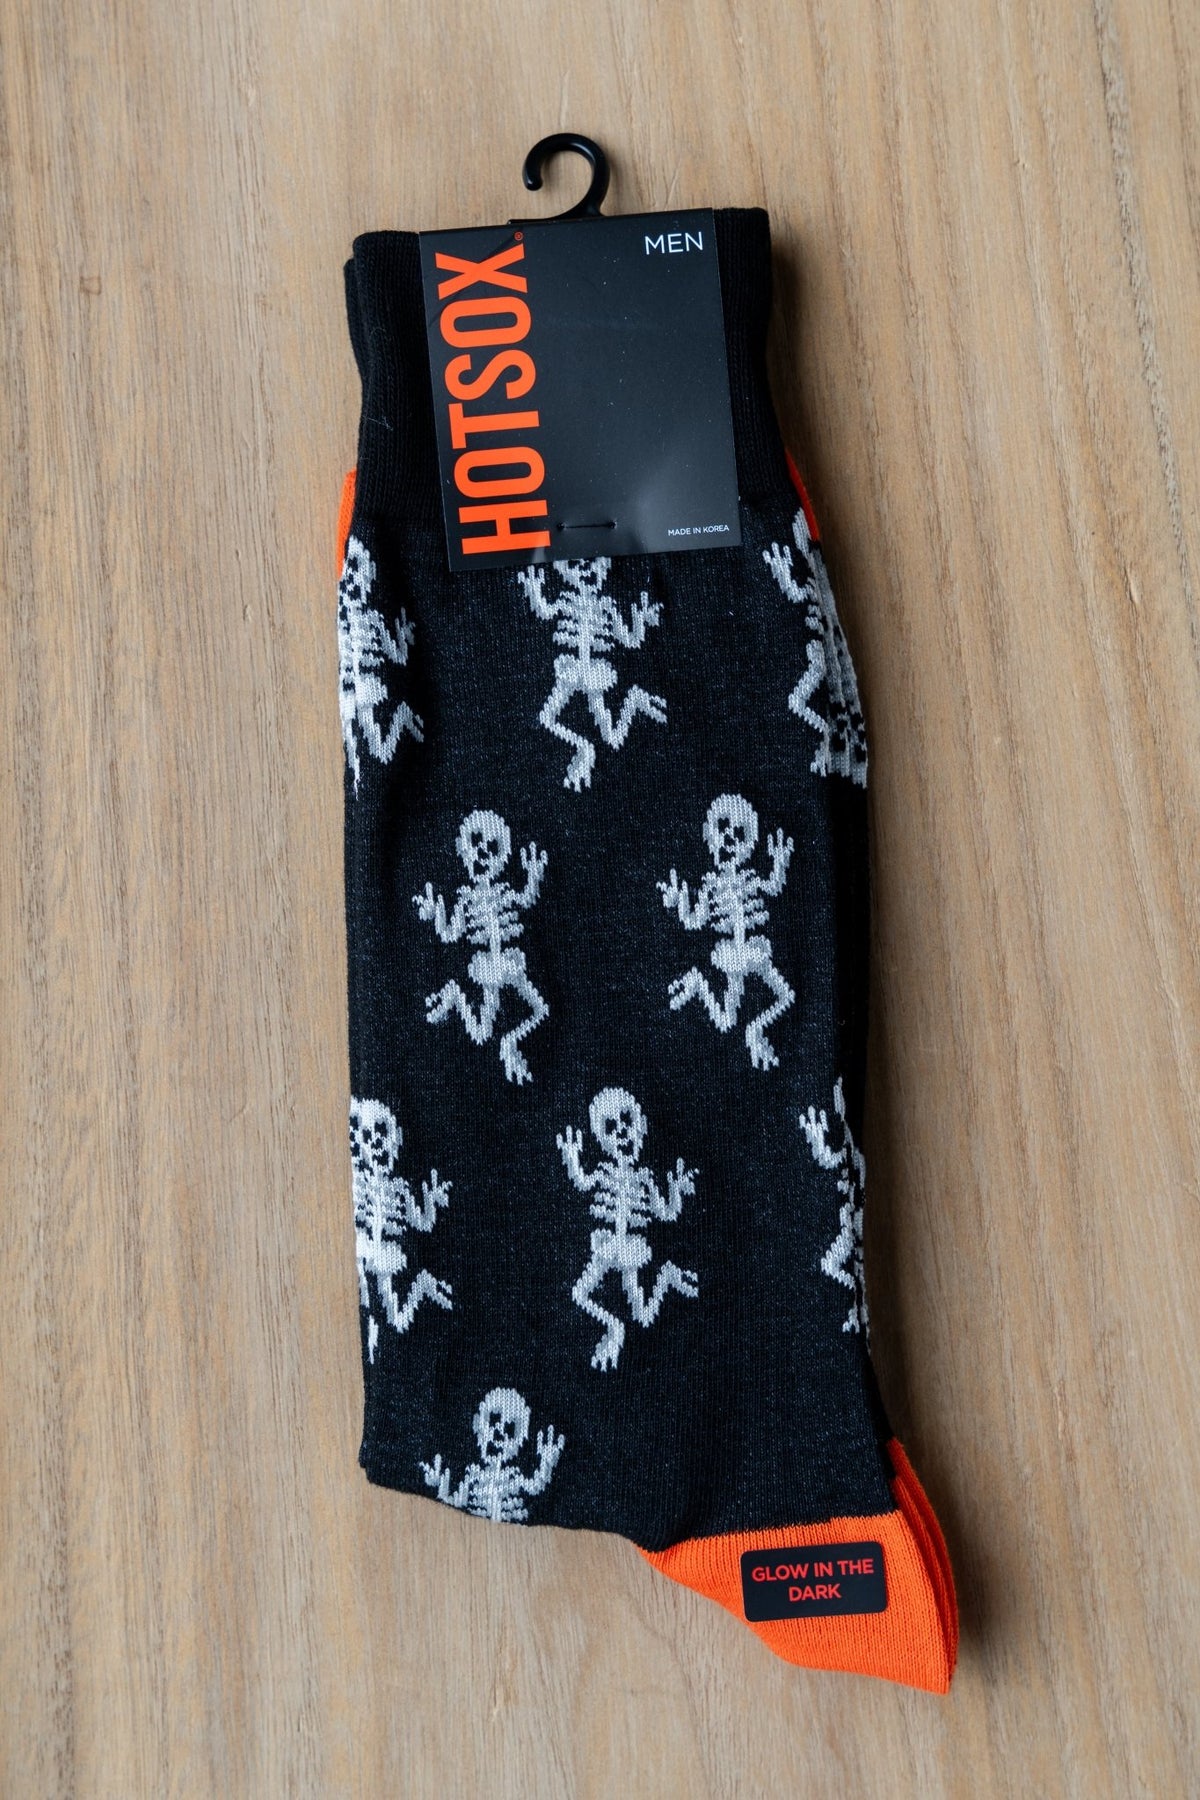 HotSox skeleton socks black - Trendy Socks at Lush Fashion Lounge Boutique in Oklahoma City